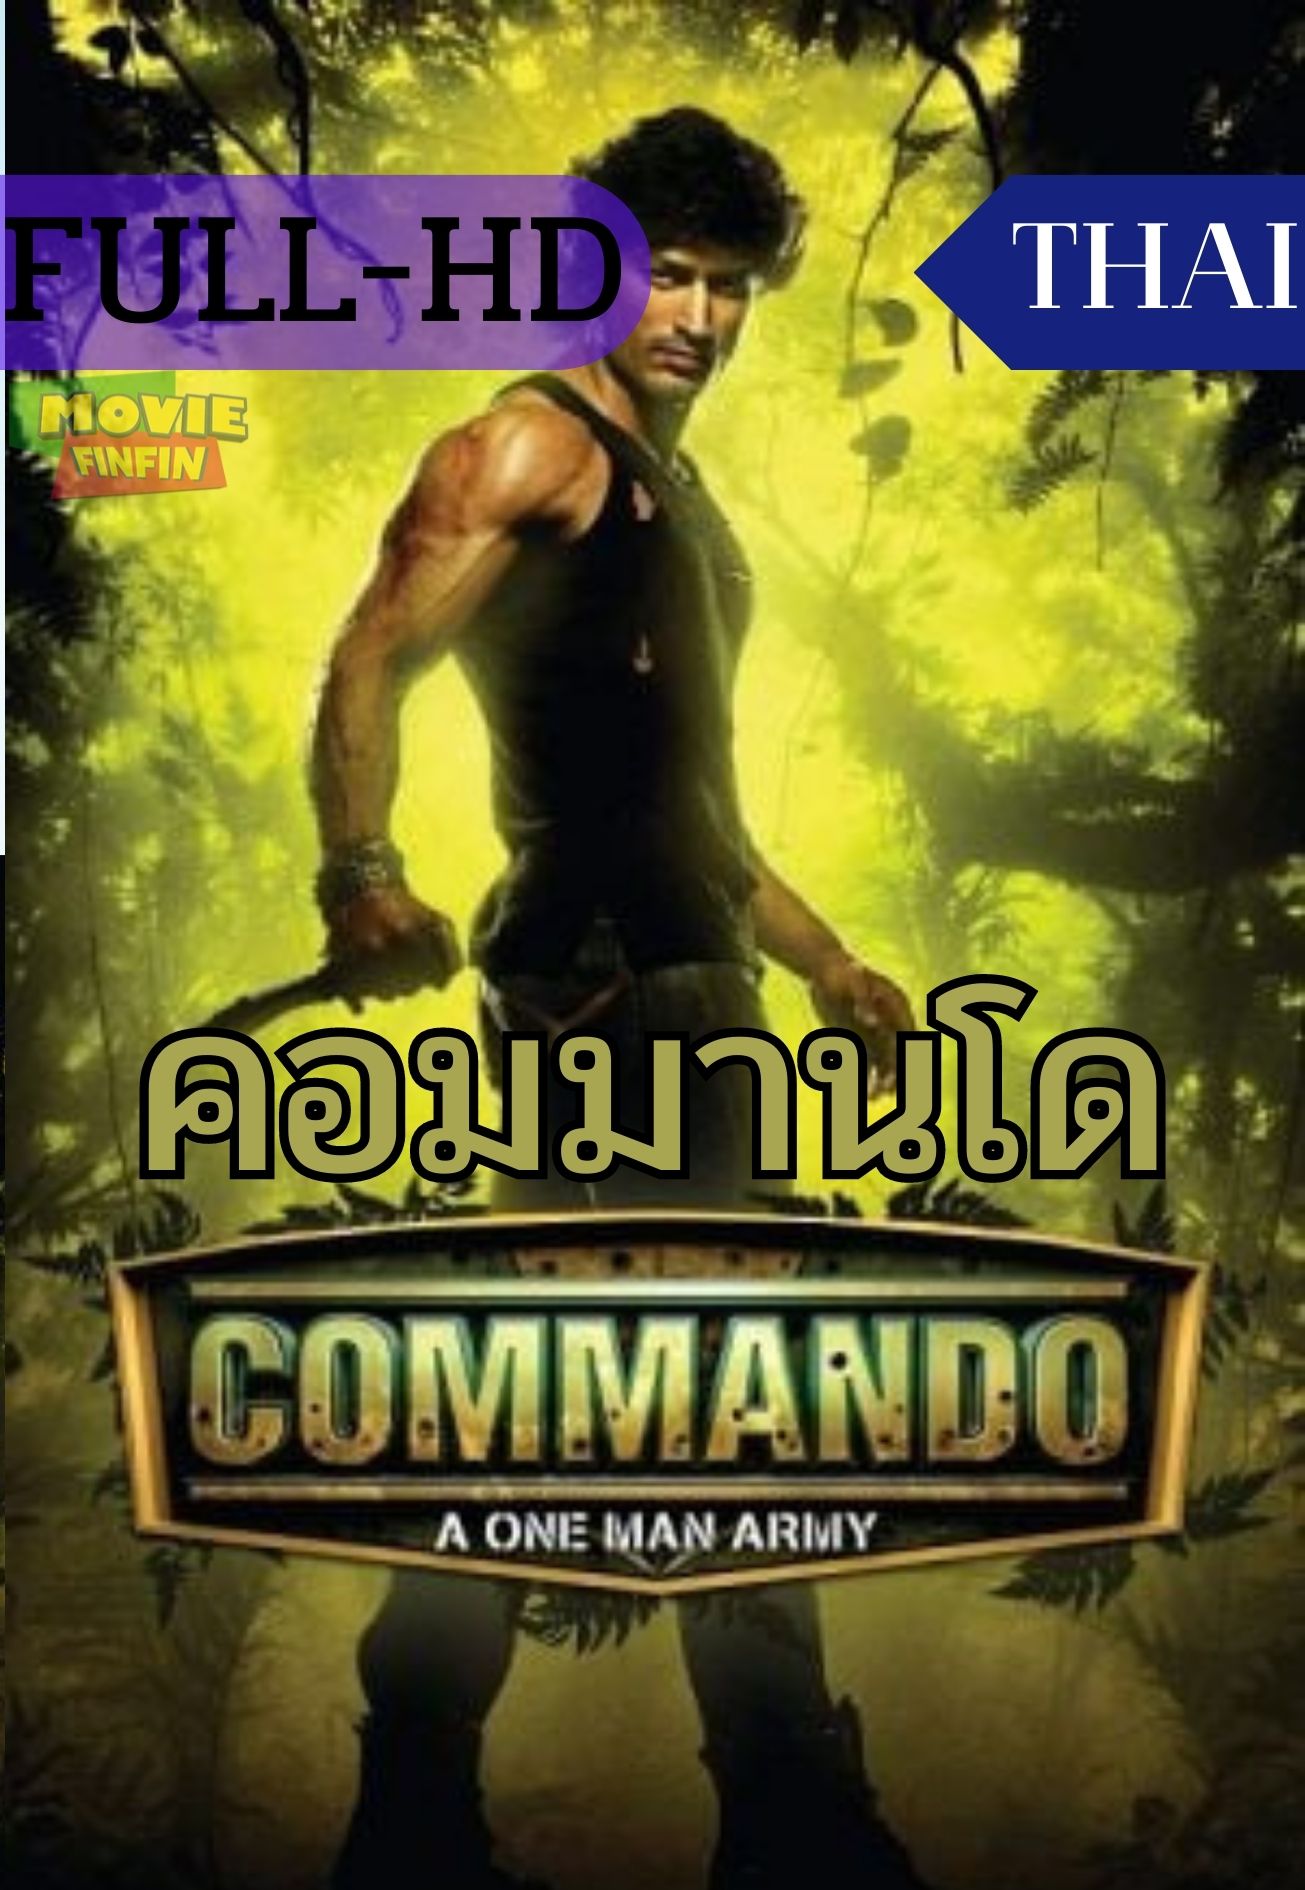 Commando (2013) คอมมานโด